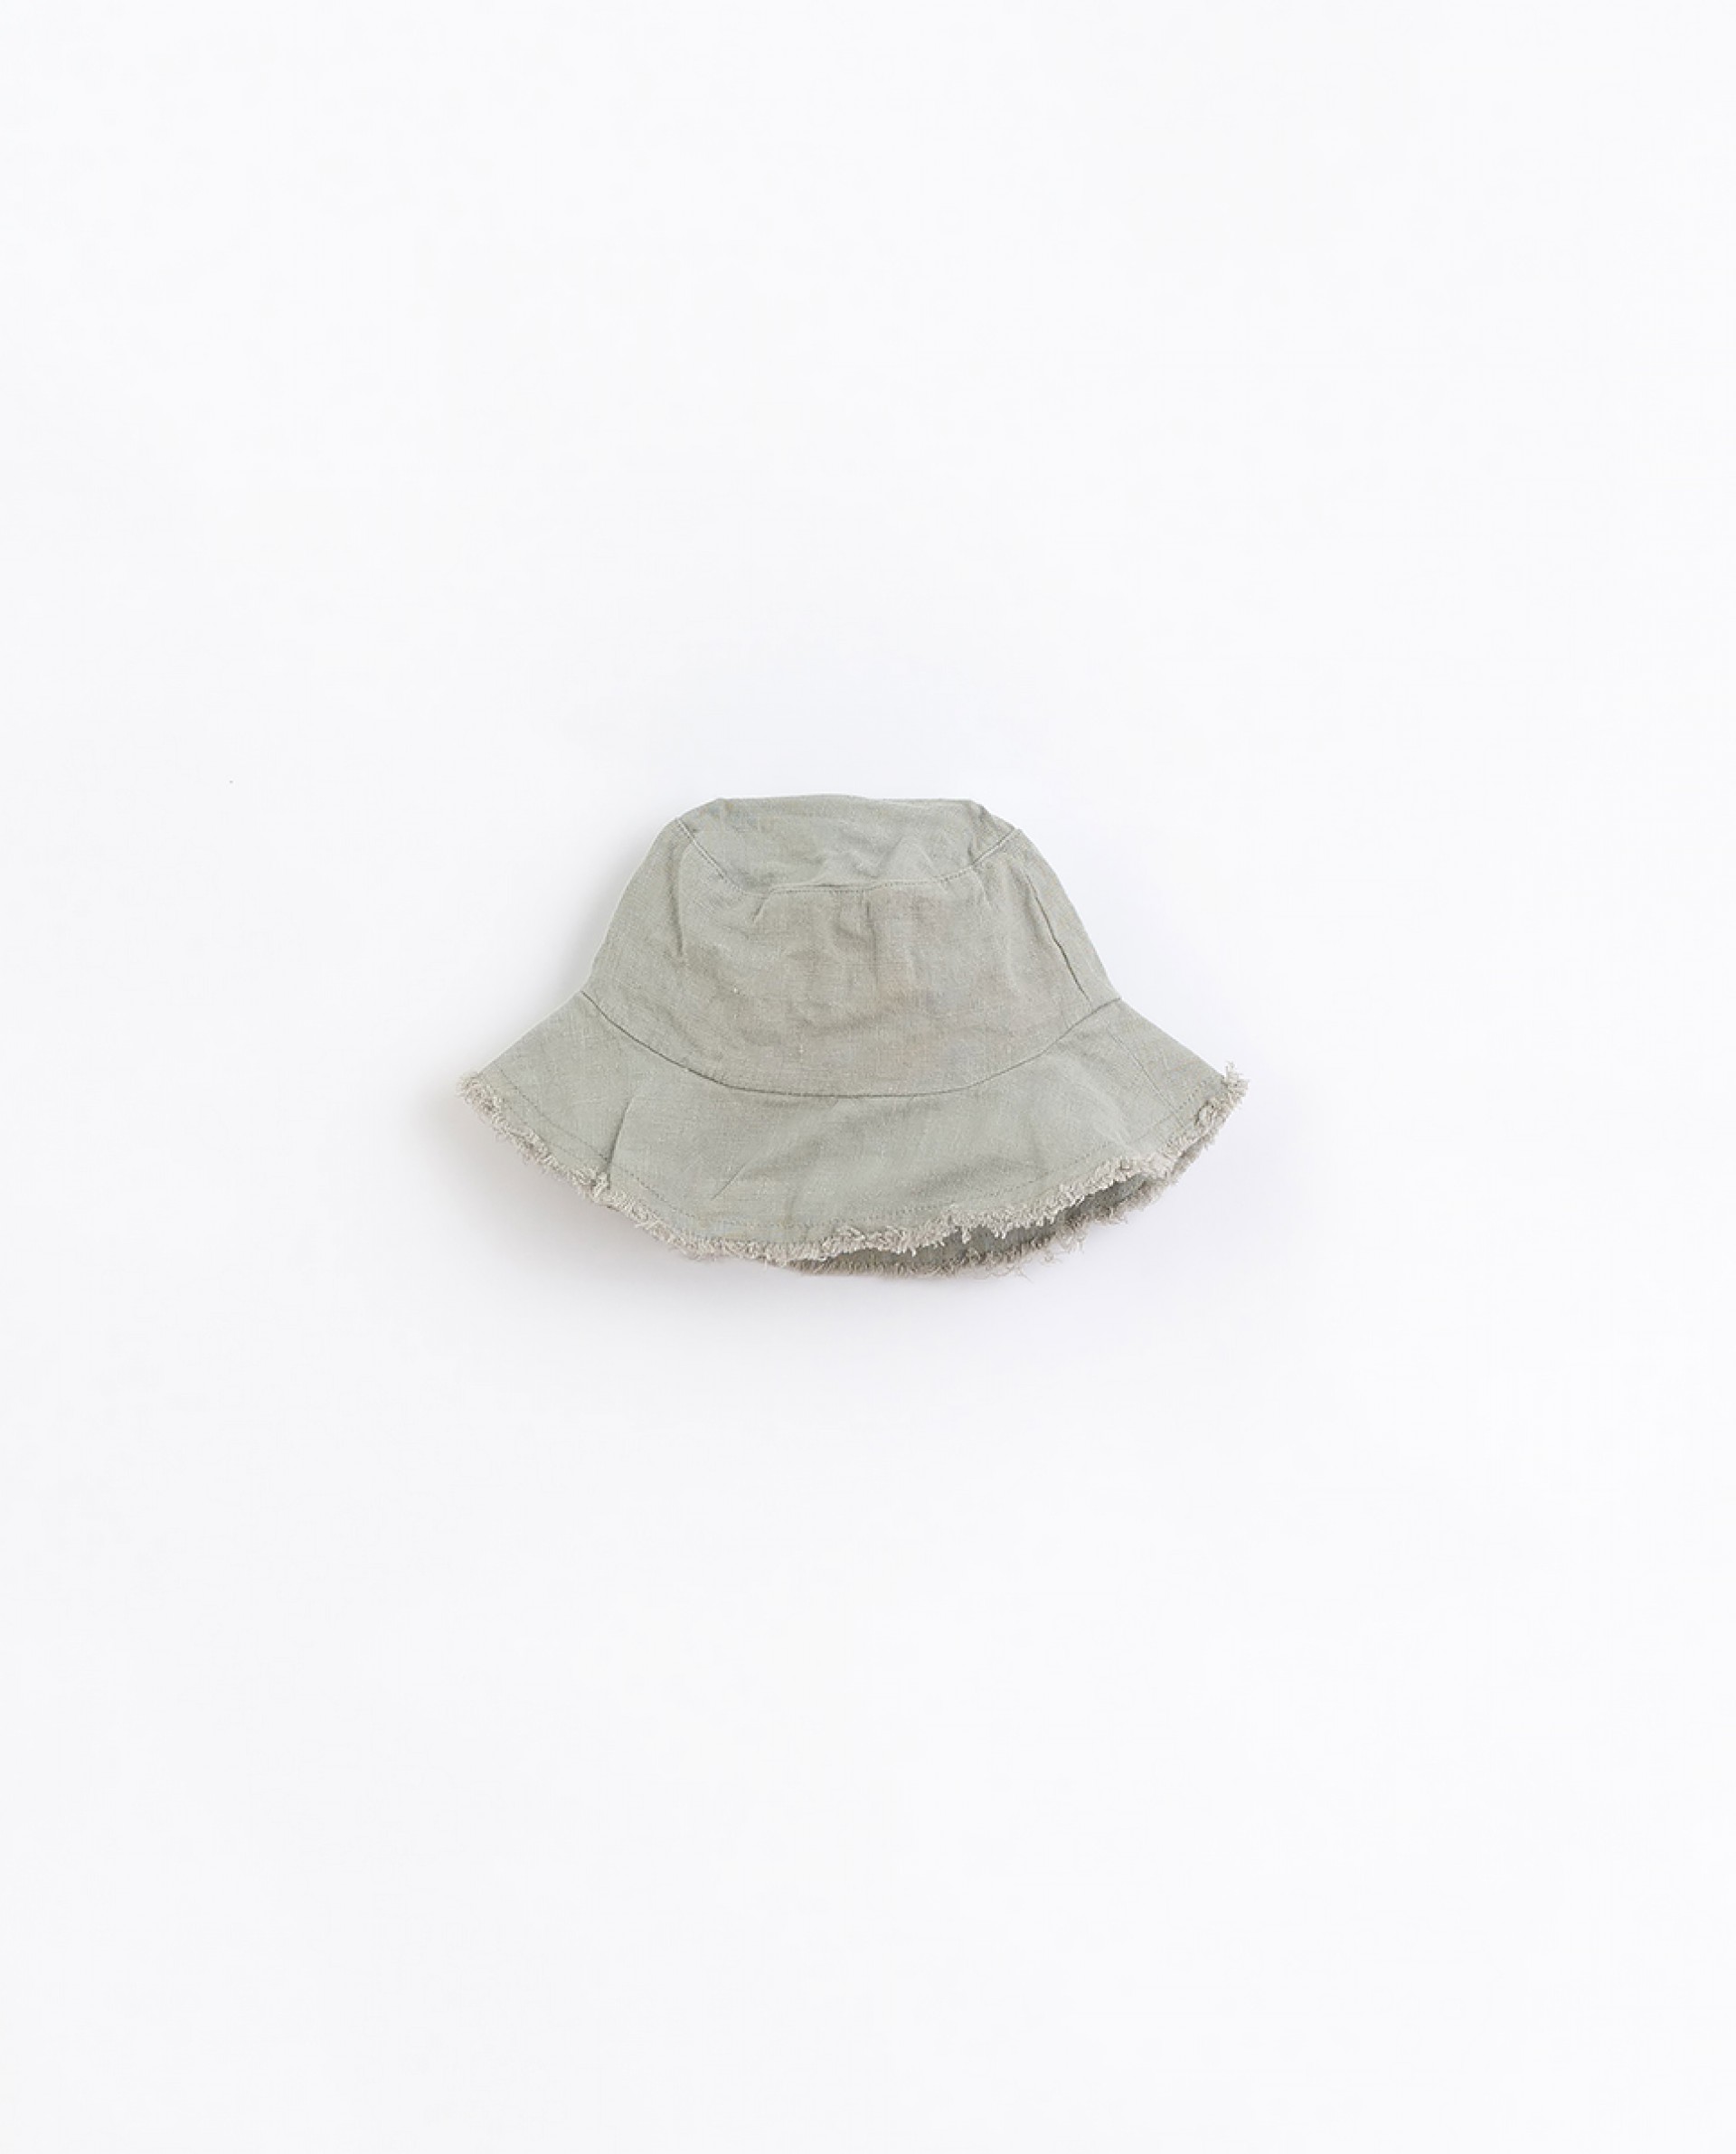 Sombrero de lino con forro |Basketry